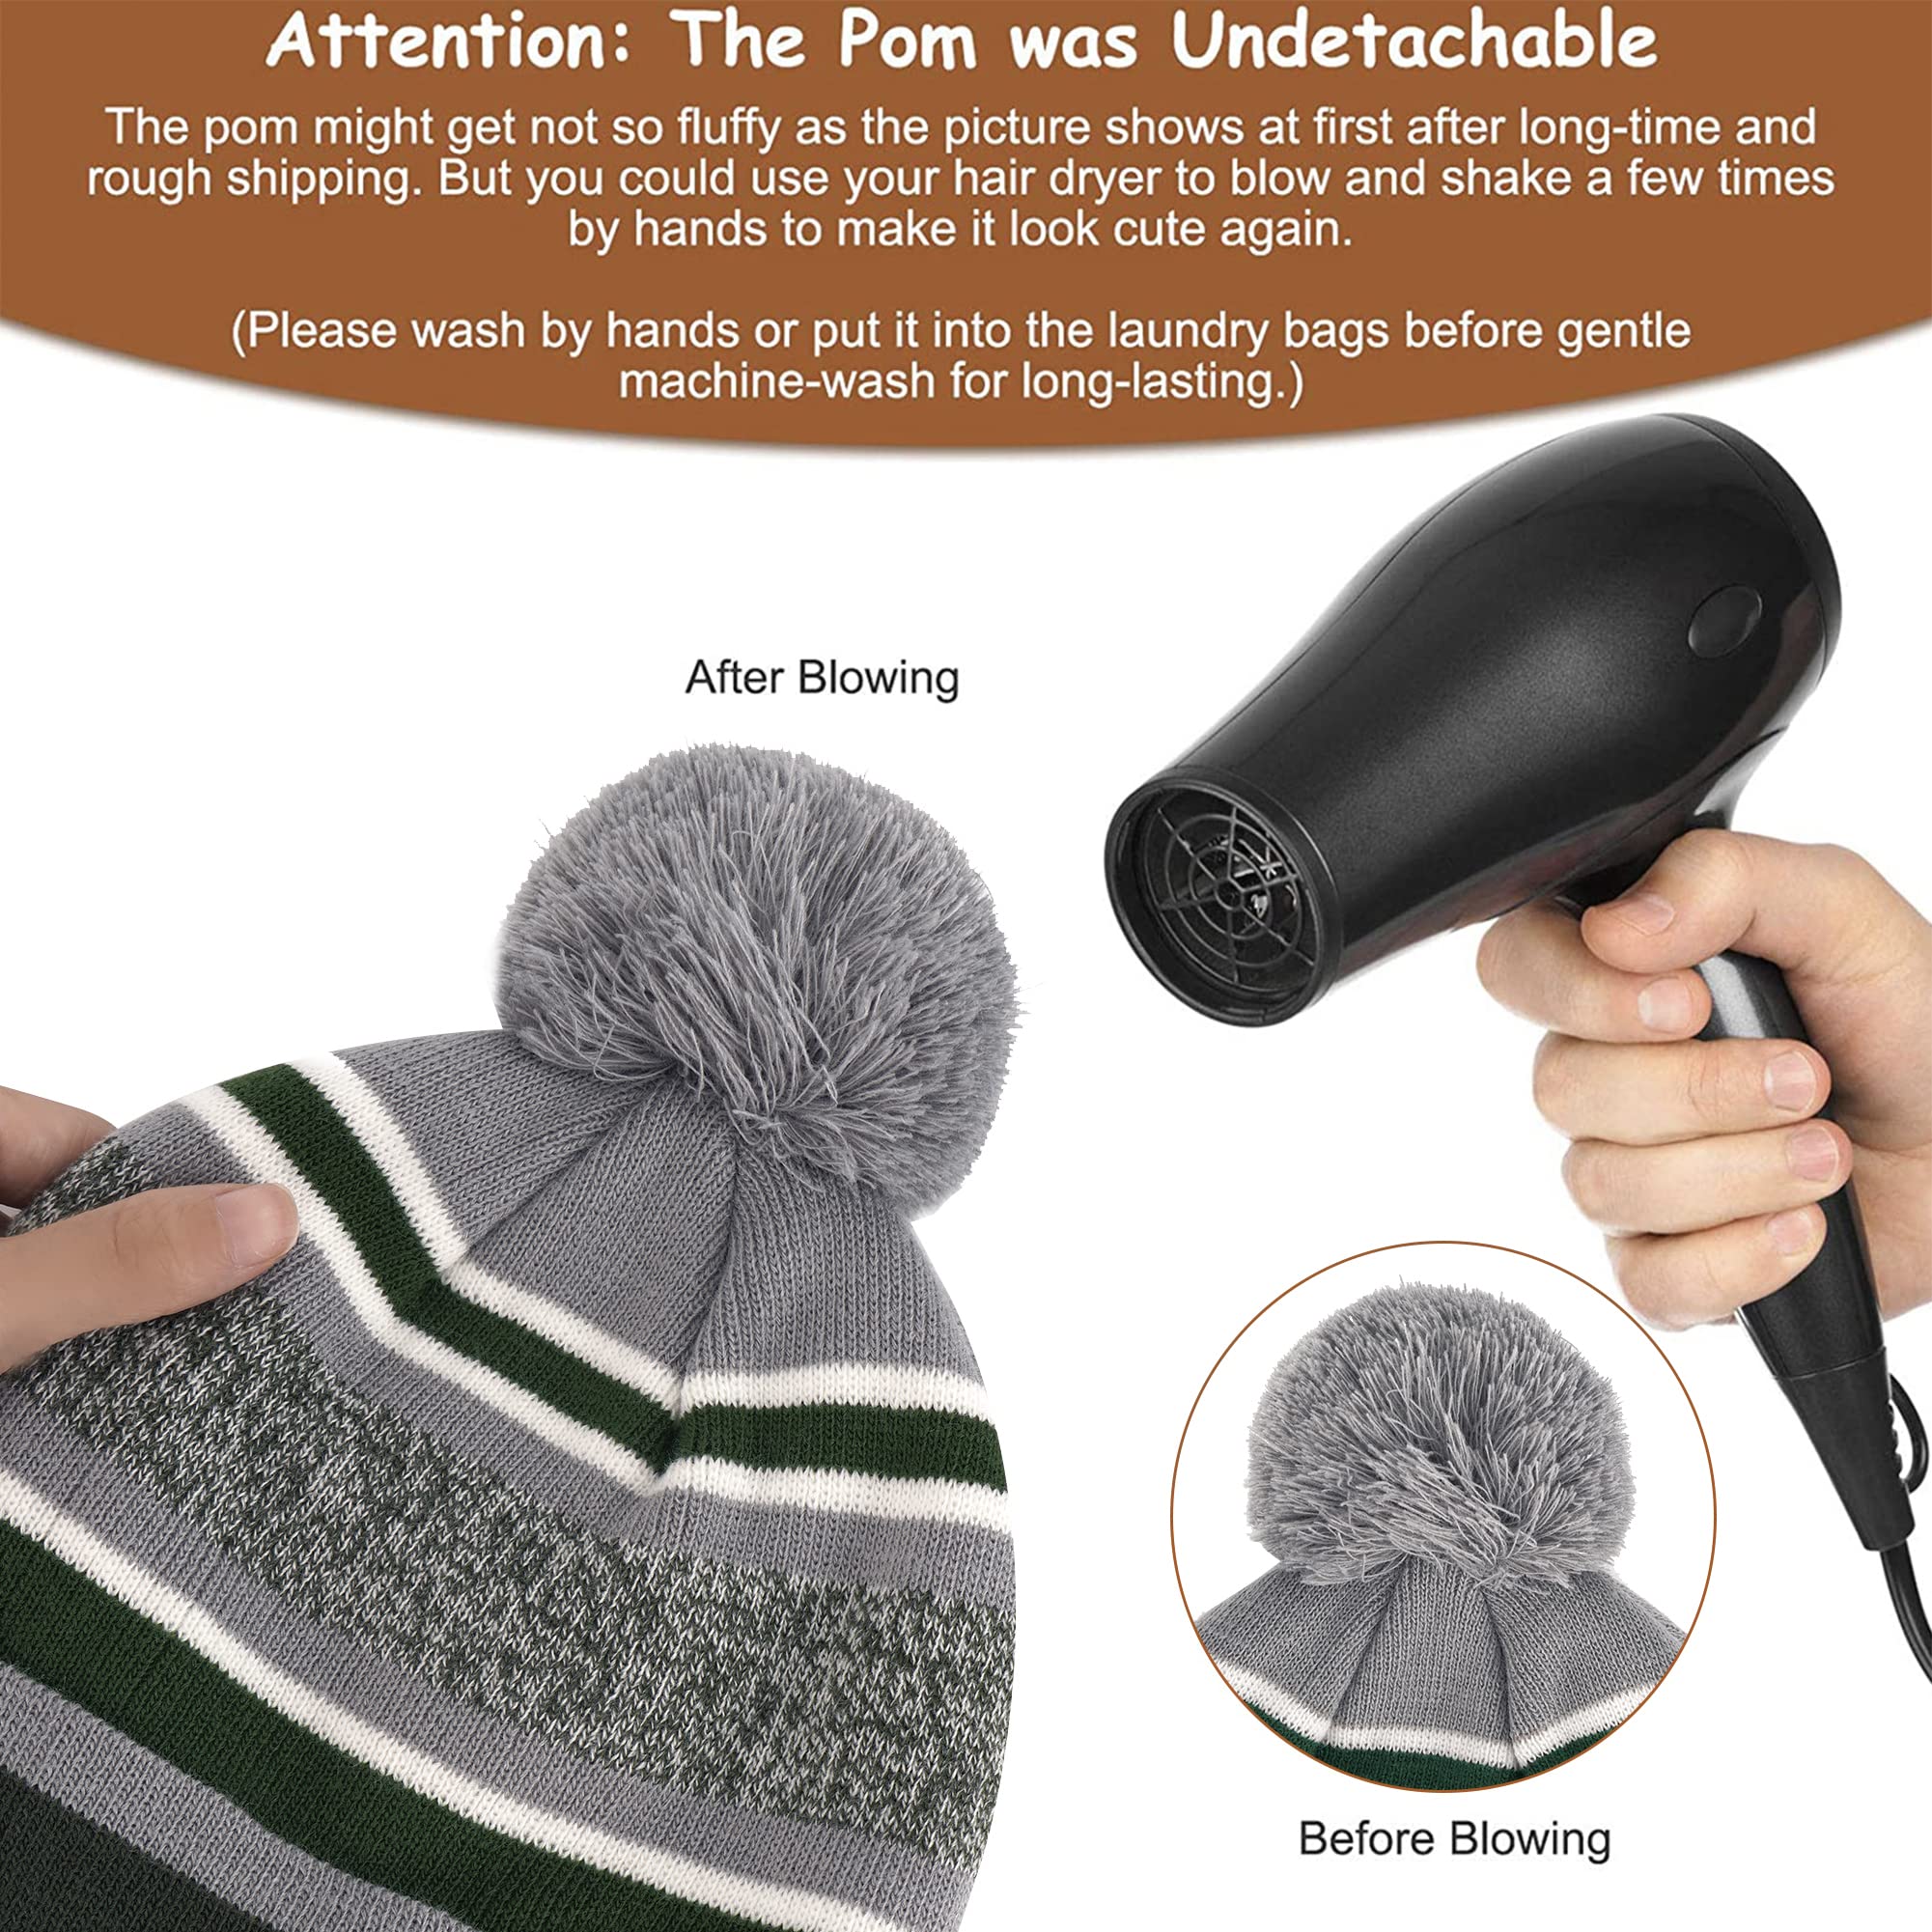 FZ FANTASTIC ZONE Kids Baby Girls Winter Knit Pompom Beanie Hats Caps Scarf Neck Warmer Touchscreen Gloves Set Fleece Lined